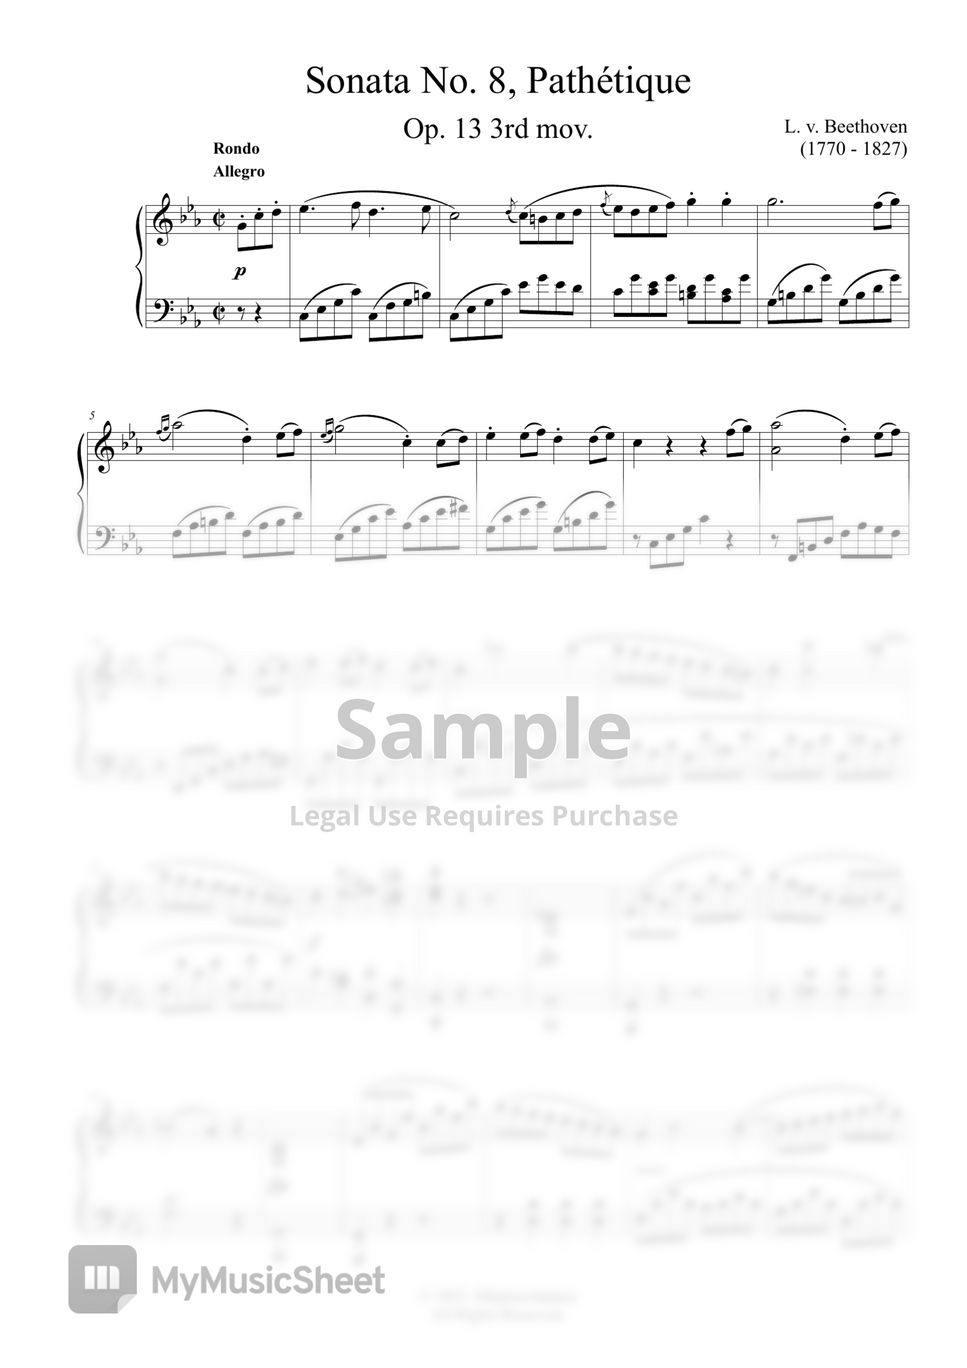 L. V. Beethoven - Pathetique (Piano Sonata No.8, 3rd mov.)